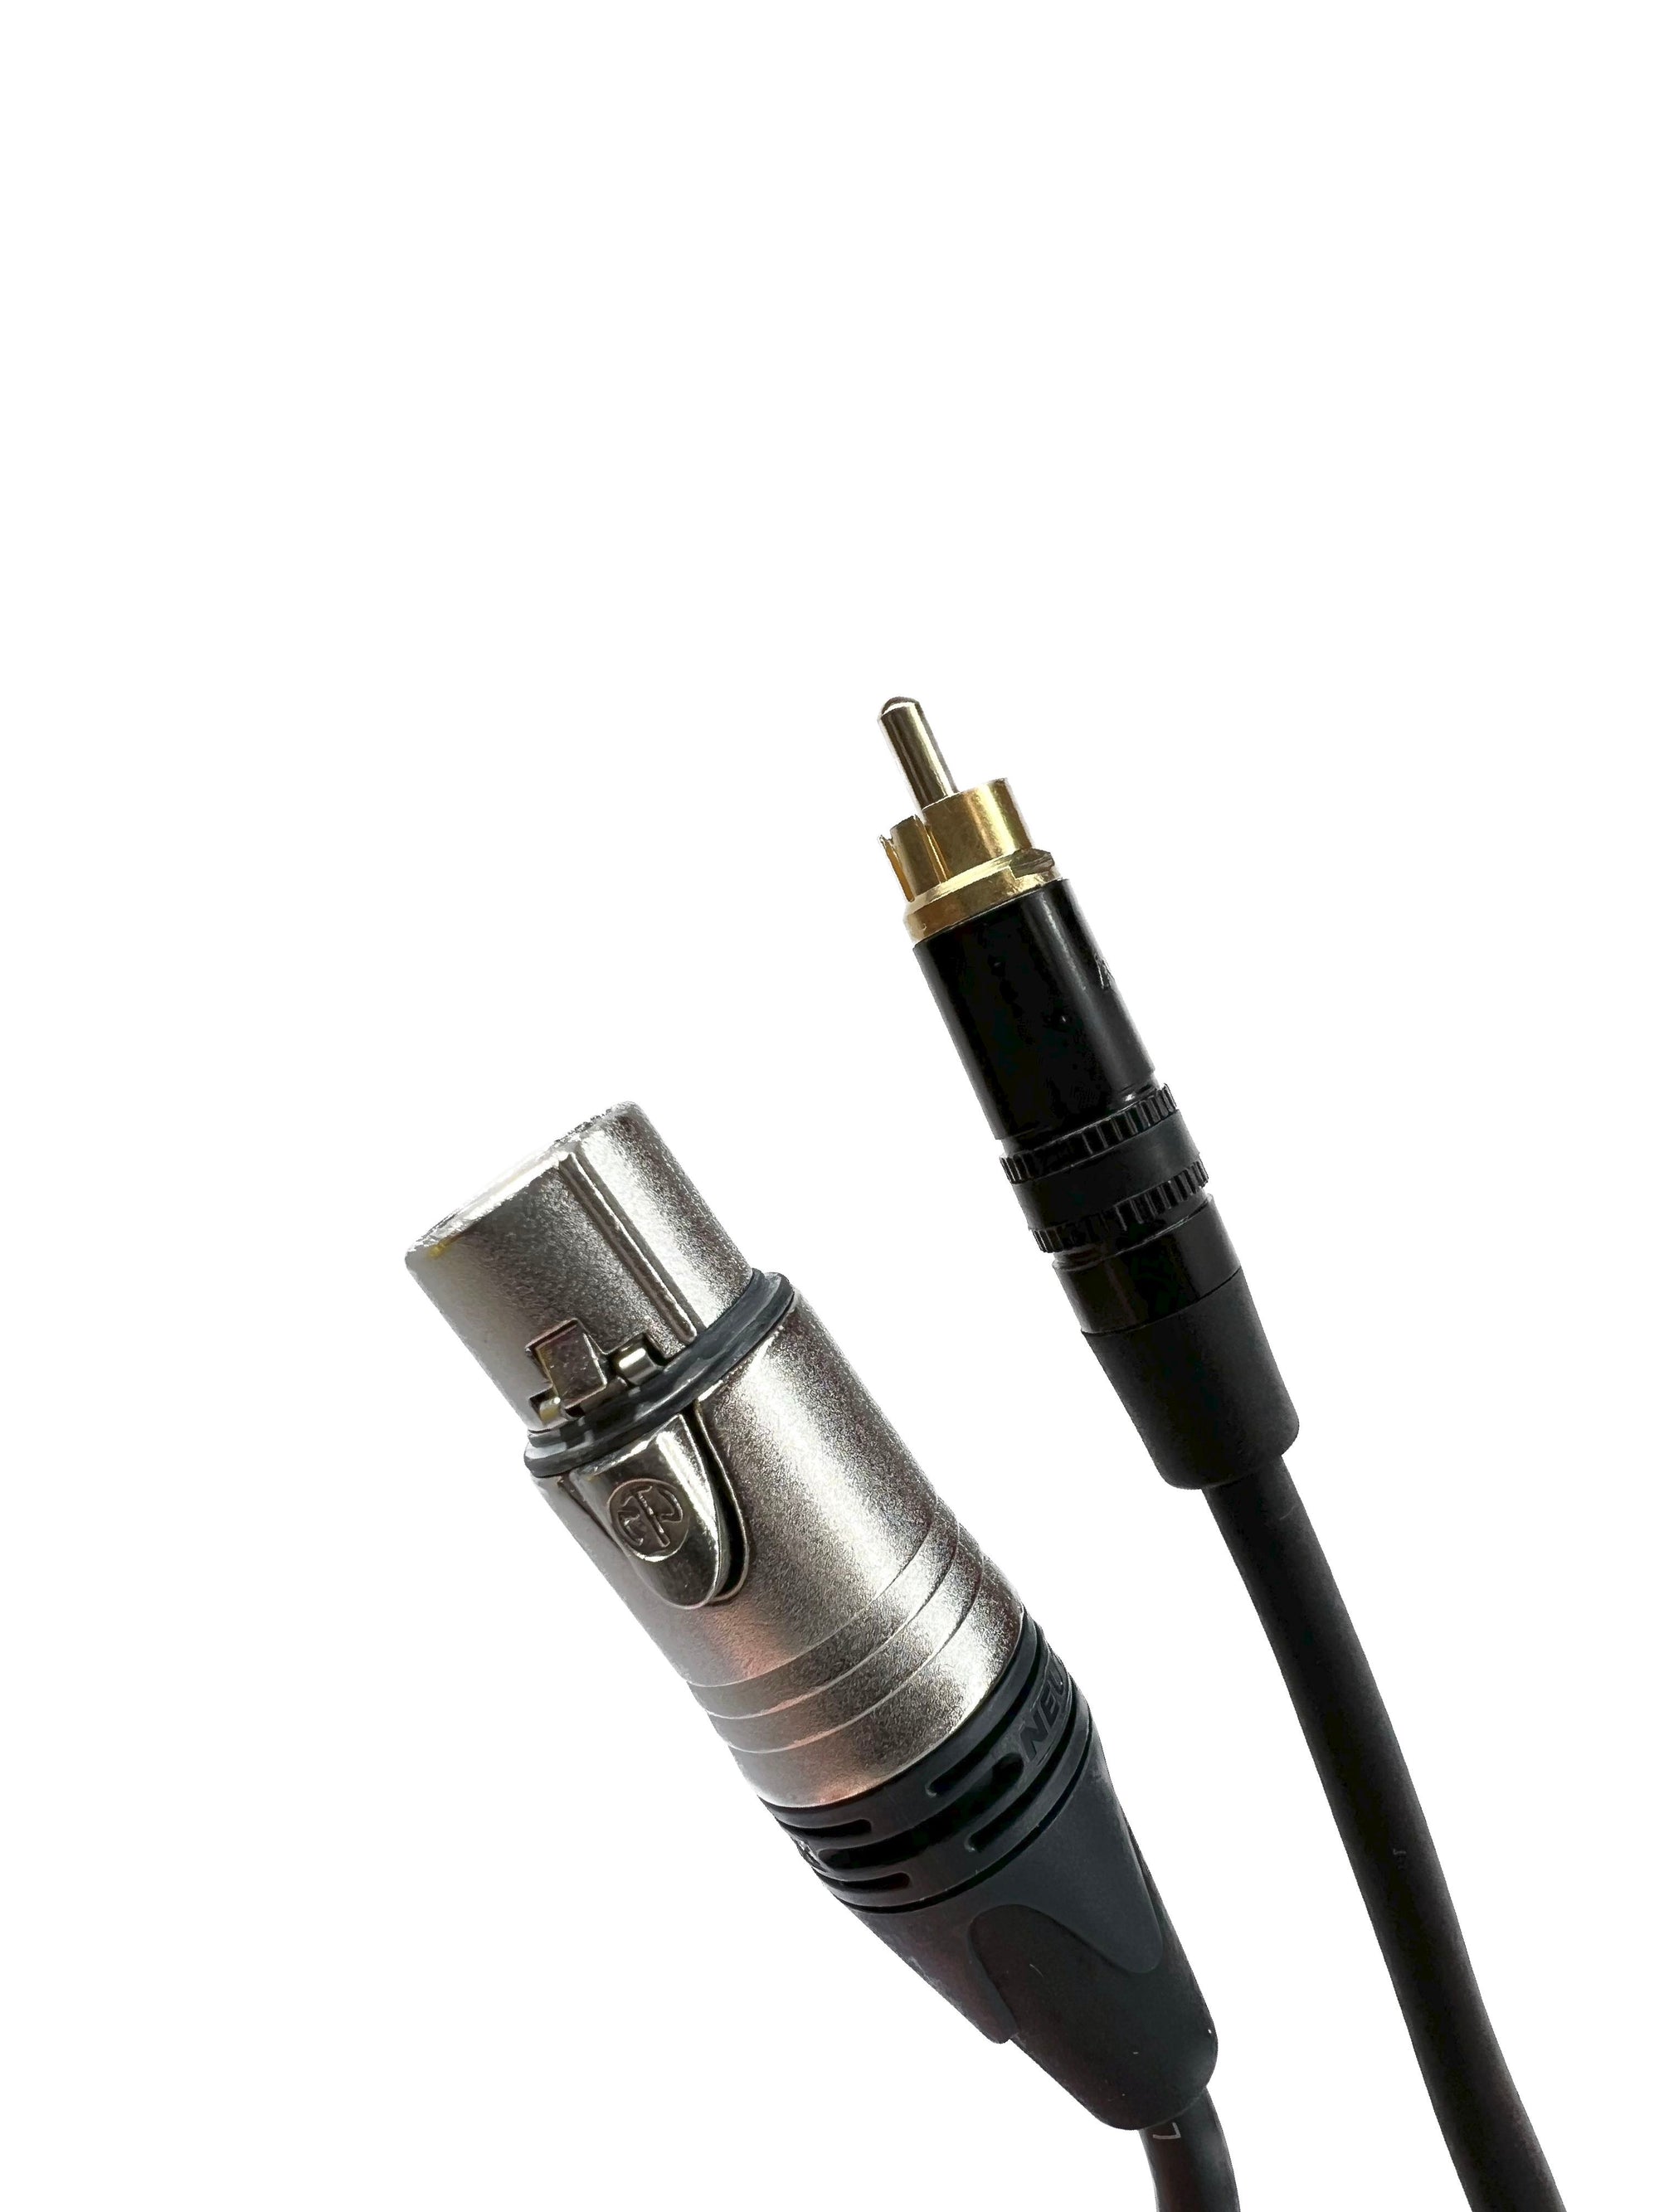 XLR Y Cable, One XLR Female to Dual RCA Female Jacks 1 ft. Long